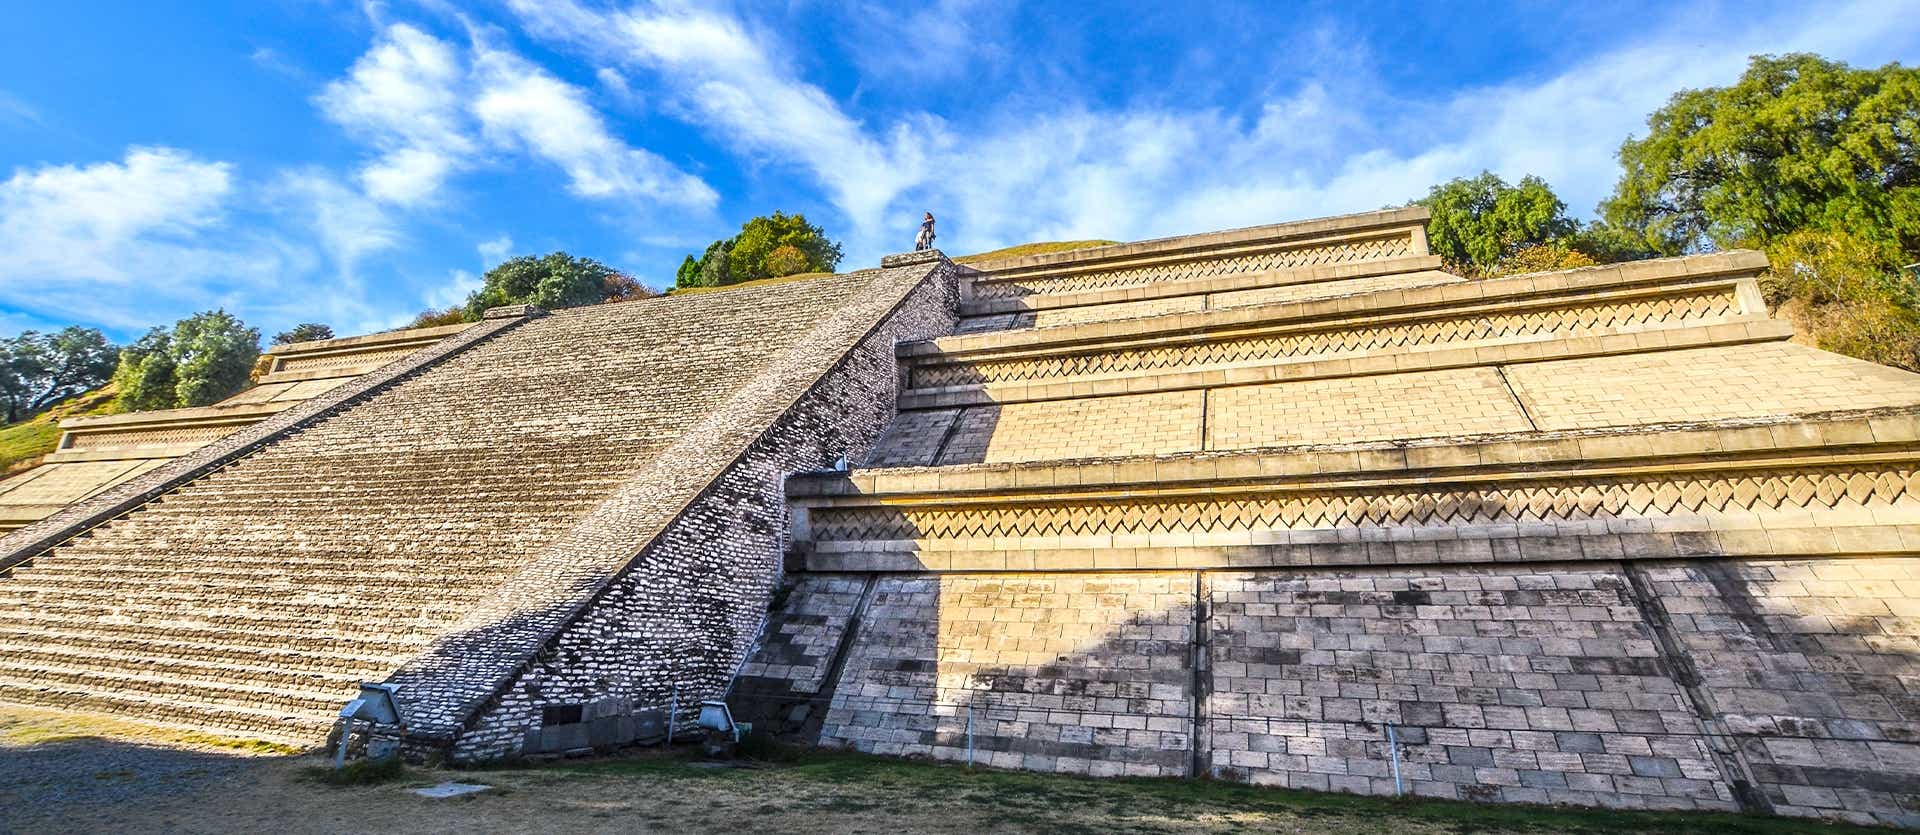 Pyramid of Cholula <span class="iconos separador"></span> Puebla